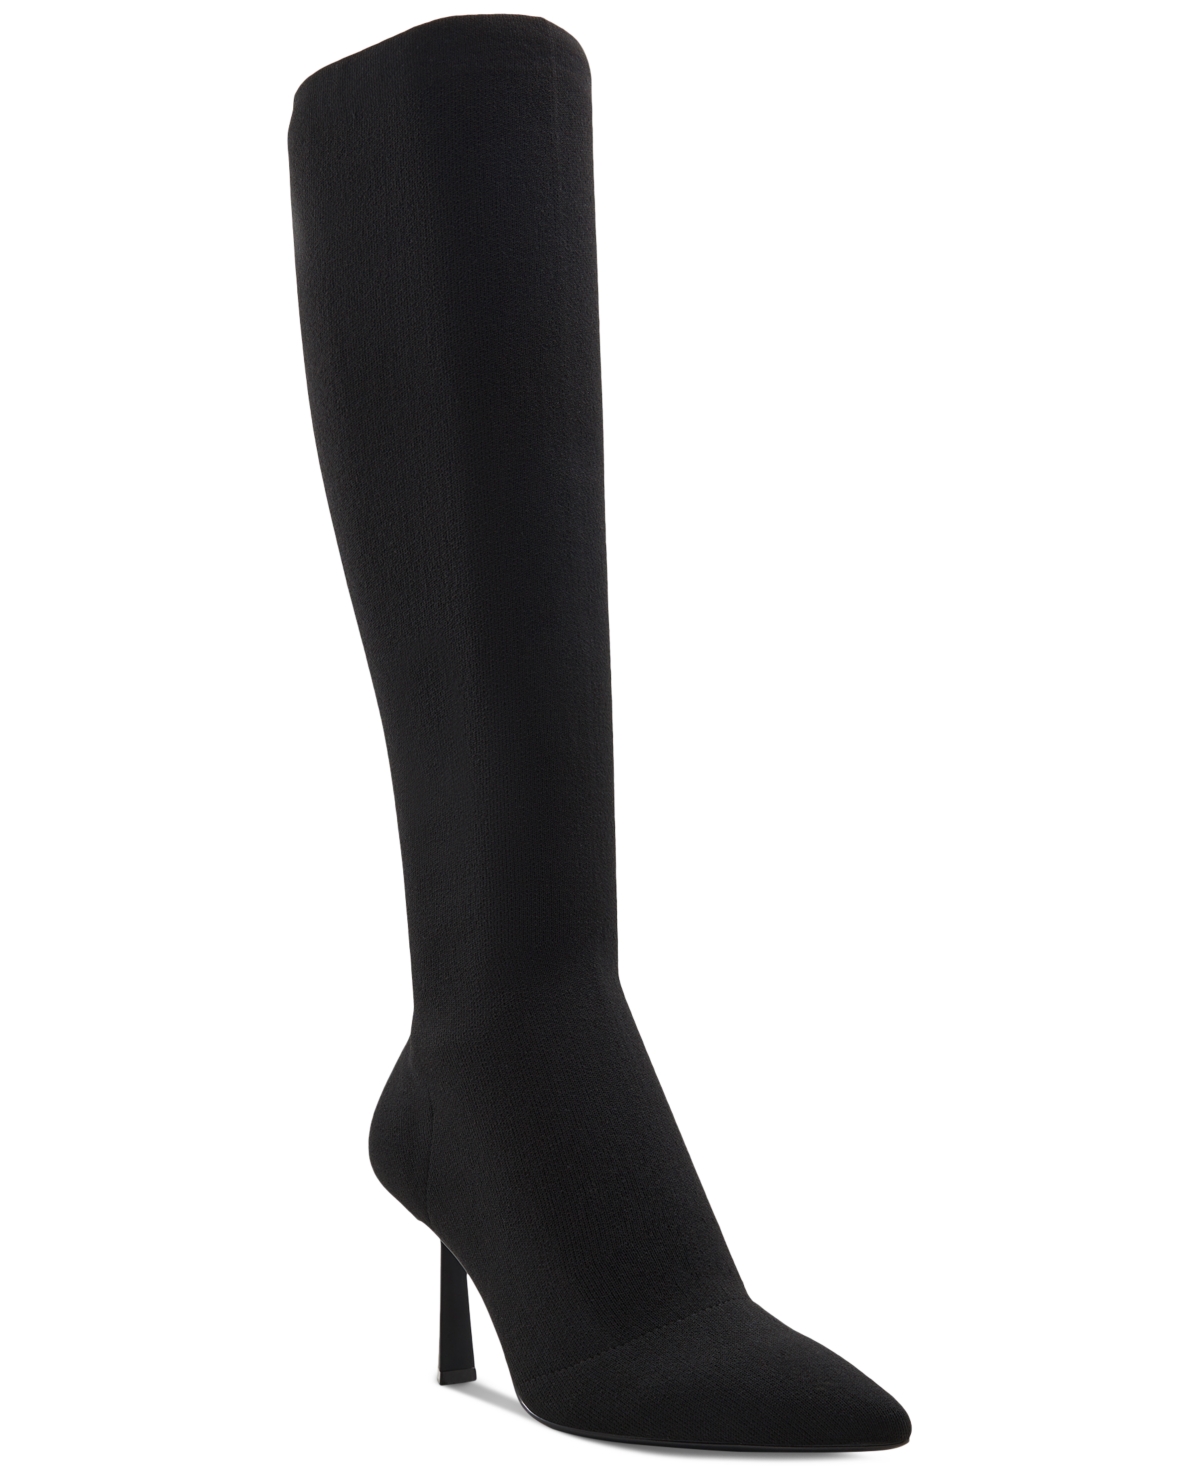 Women's Helagan Pointed-Toe Tall Dress Boots - Black